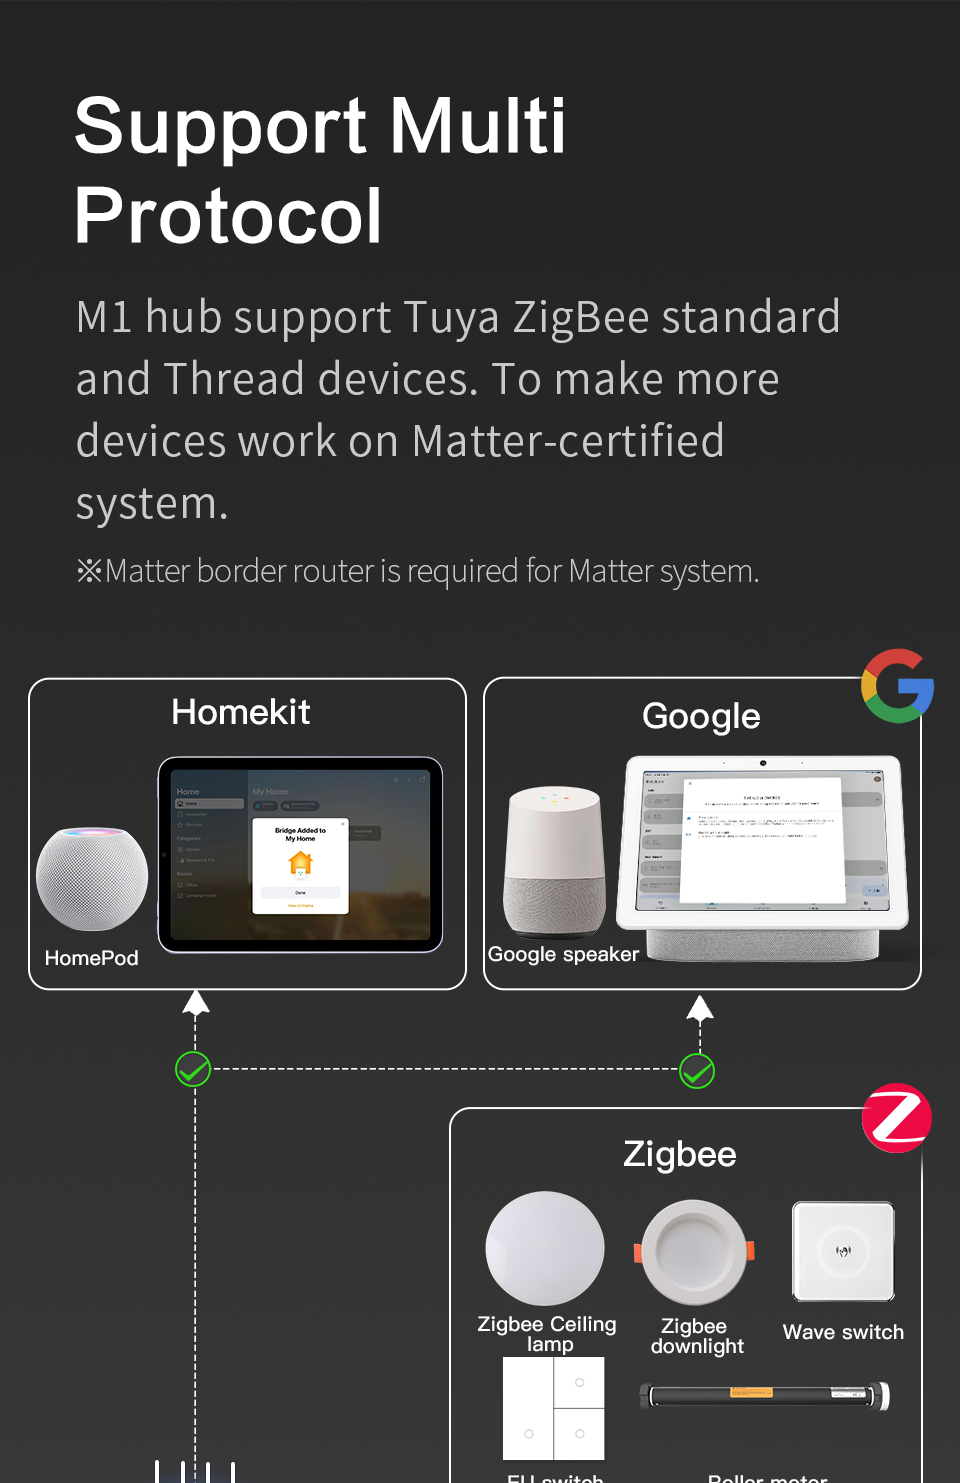 Zemismart Homekit Zigbee Hub， ZMHK-01 Smart Home Bridge，Siri Control via  Apple Home App，Alexa / Google Home Control via Tuya APP